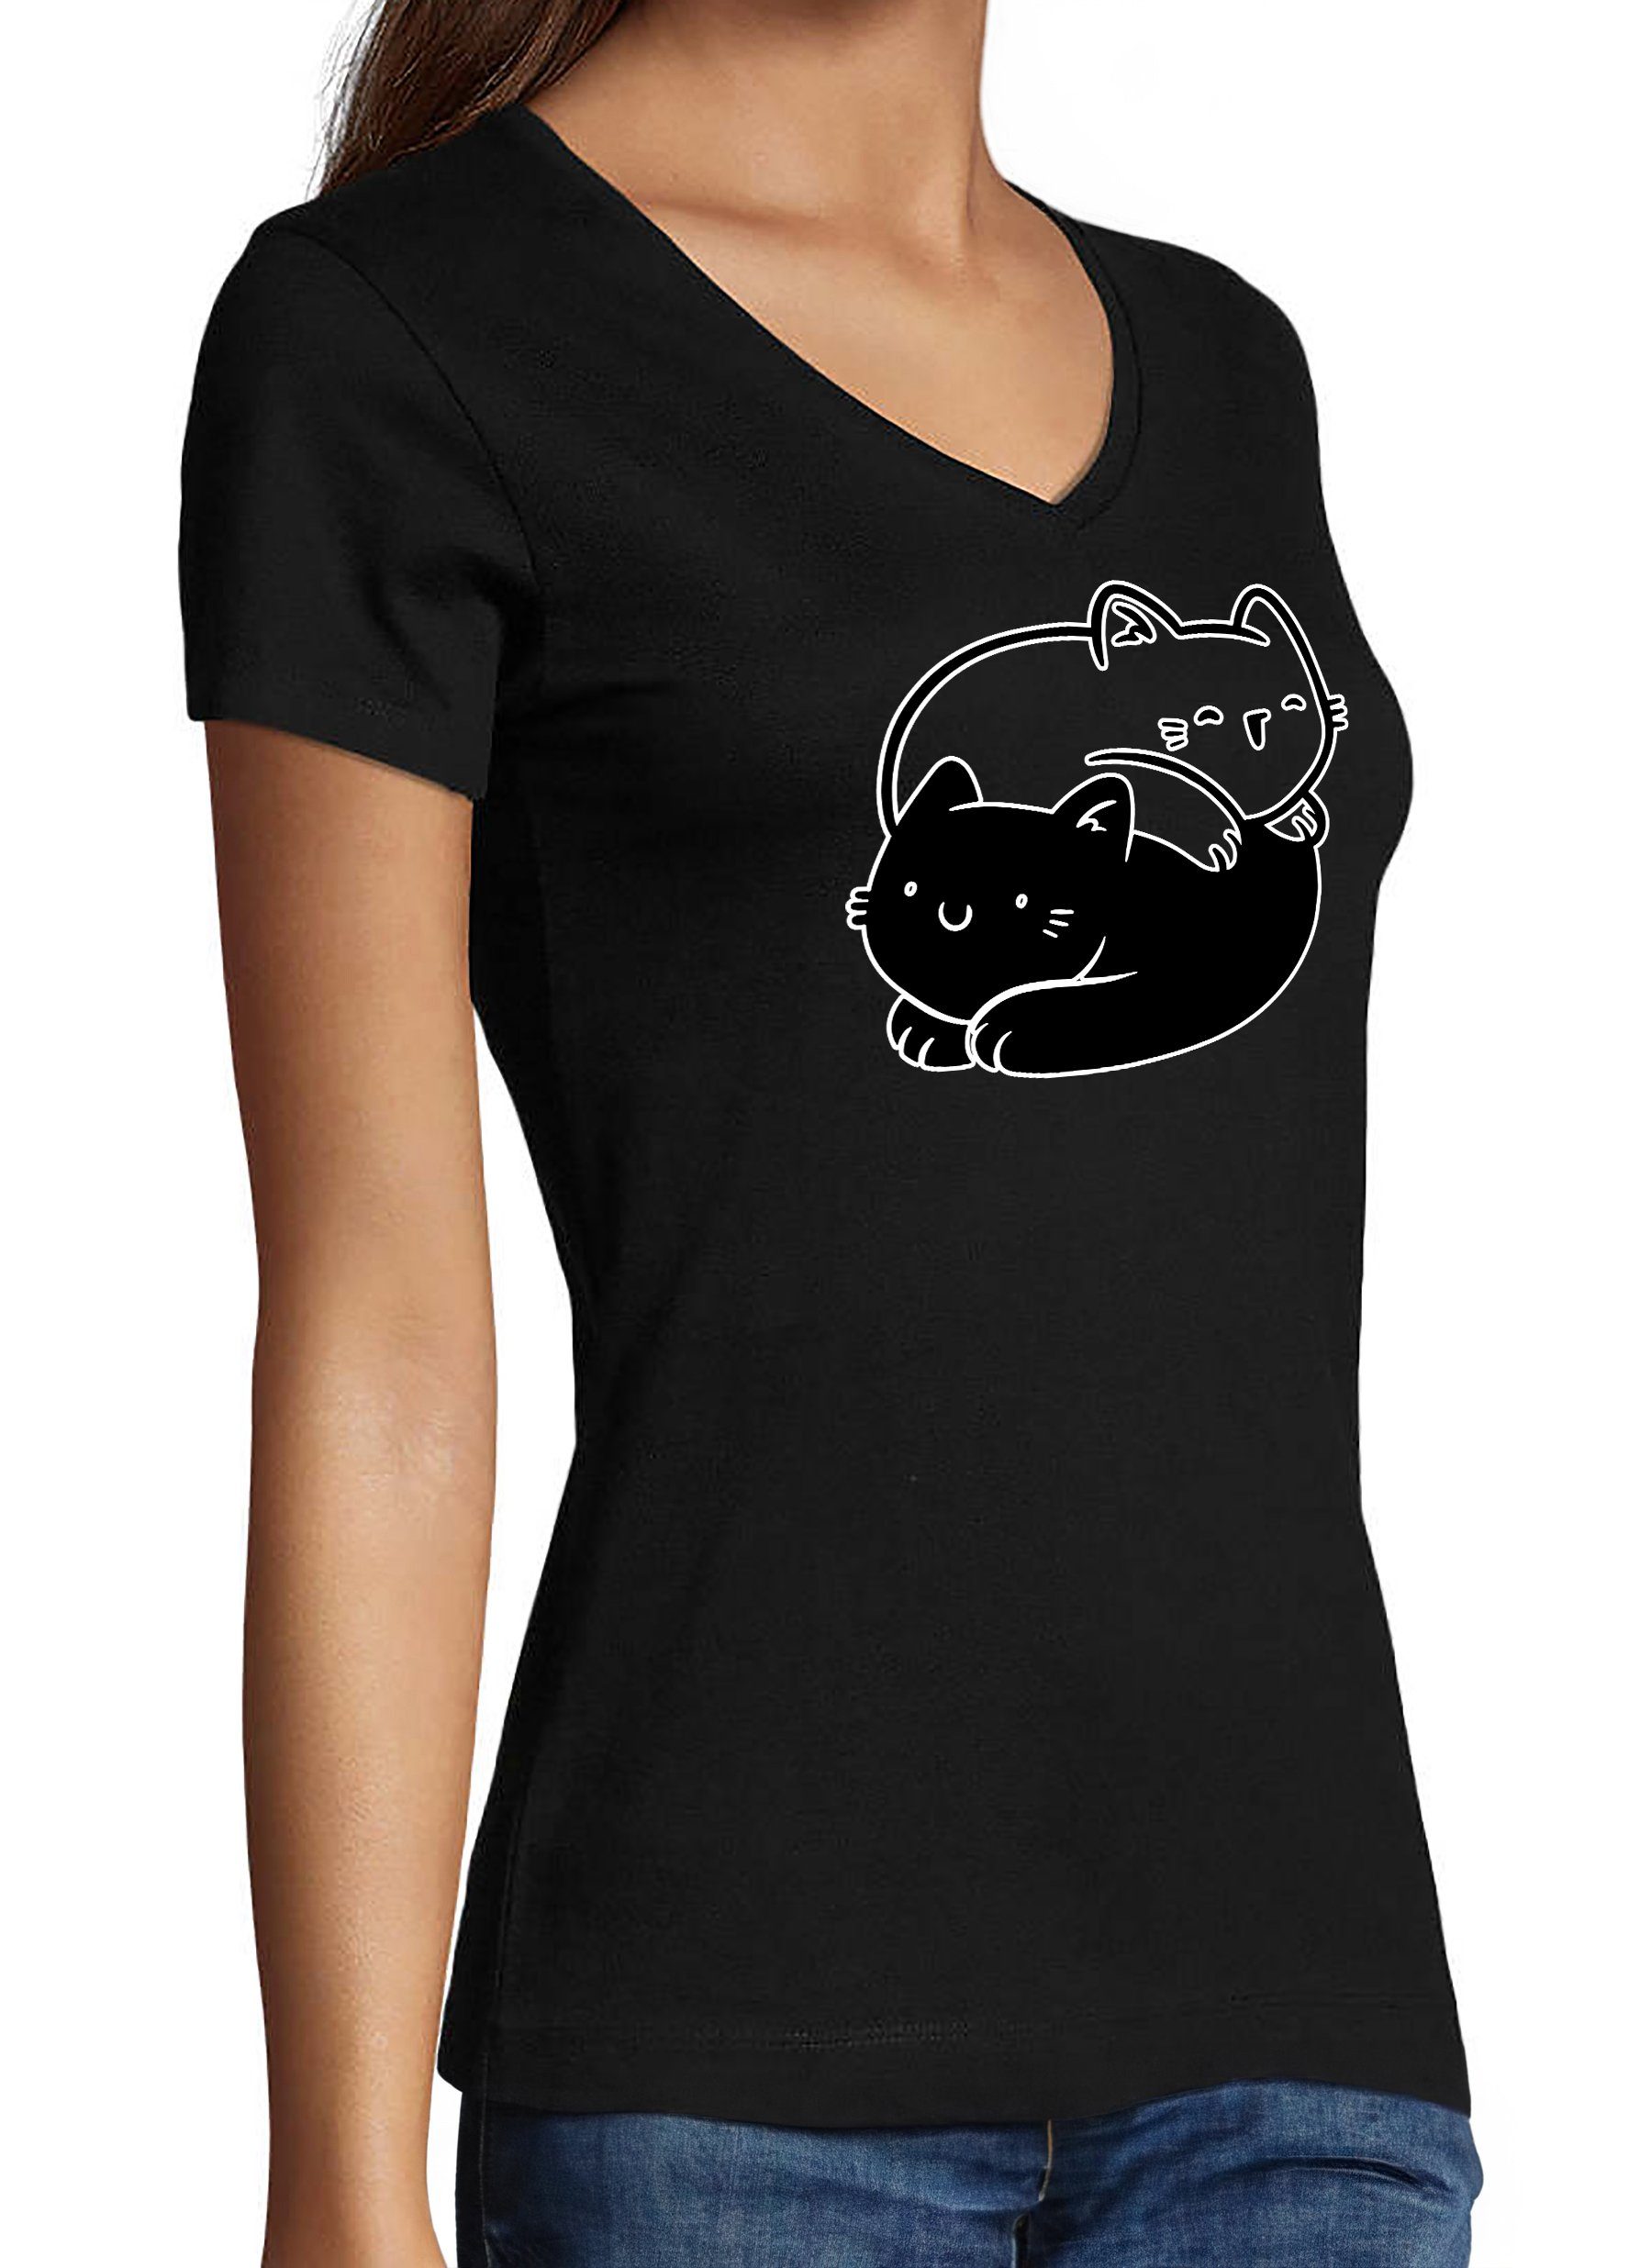 MyDesign24 T-Shirt Aufdruck, Baumwollshirt Slim Print mit - schwarz Katze Katzen bedruckt Yang Damen Yin i112 Fit, Shirt